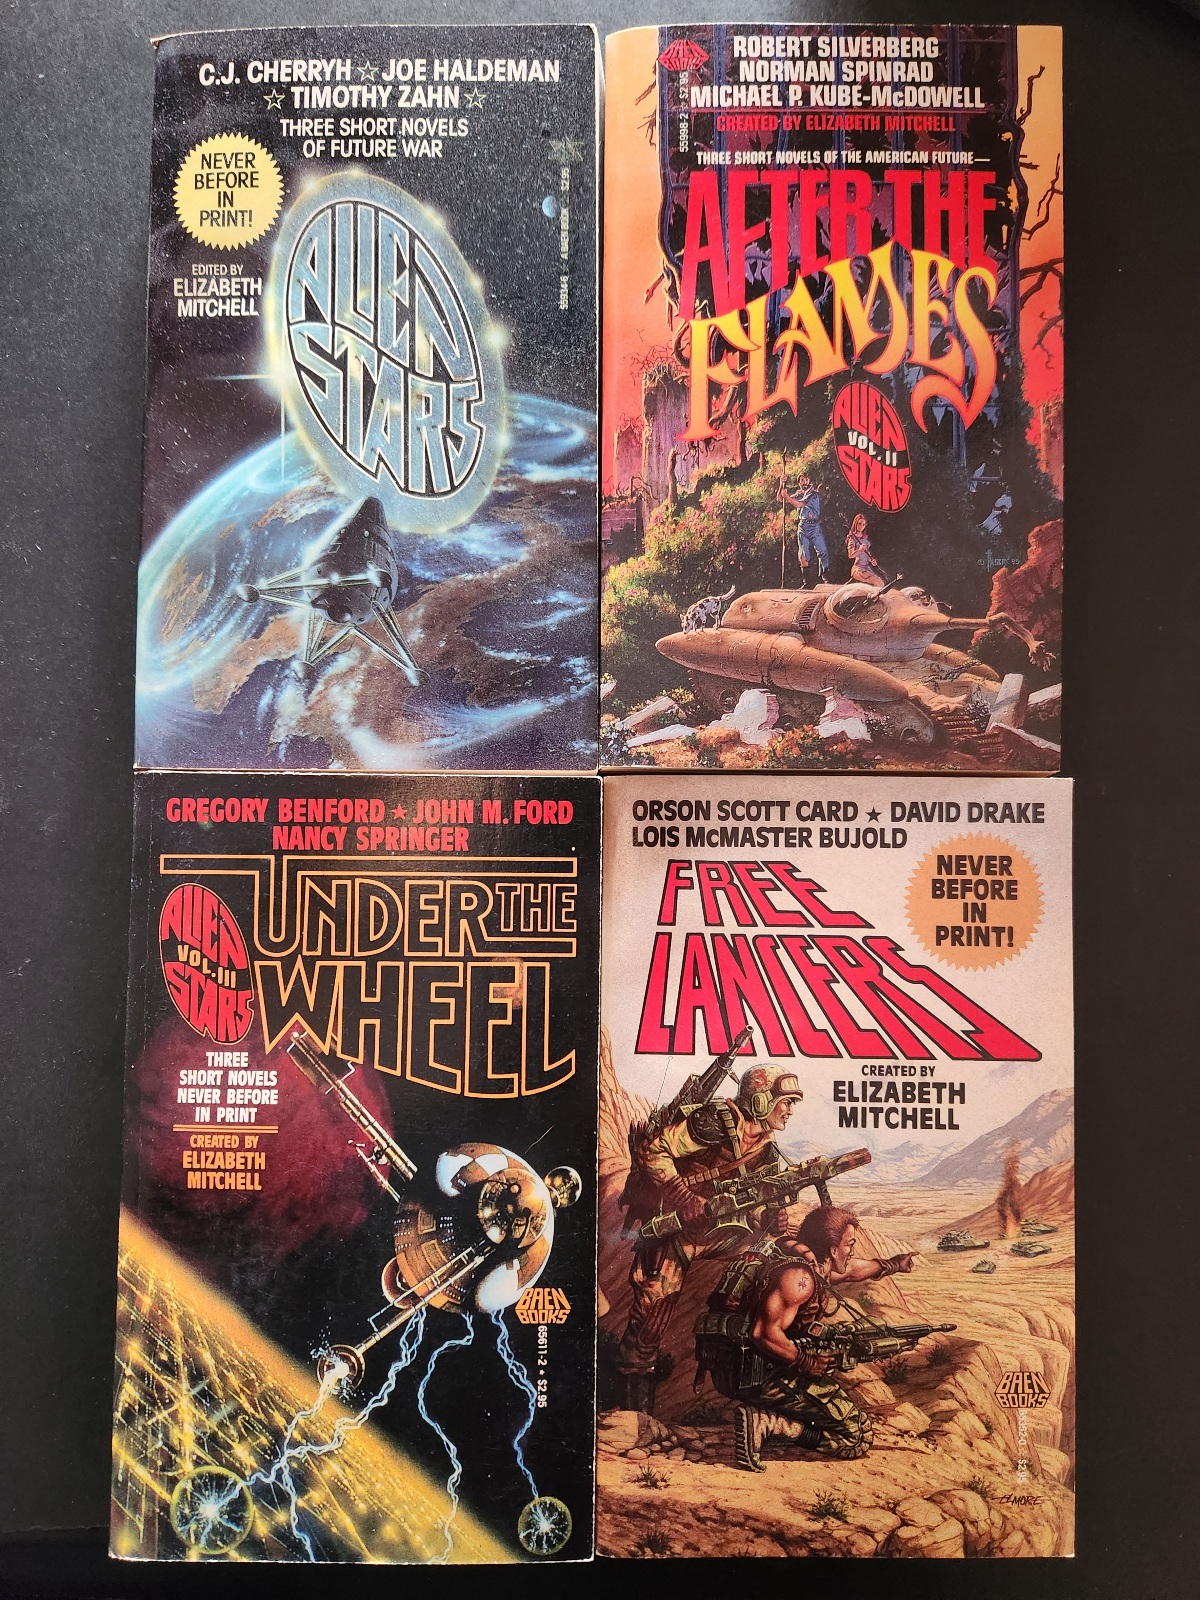 Alien Stars Vol I-IV edited by Elizabeth Mitchell Complete Set 1985 Baen Books Science Fiction Paperbacks